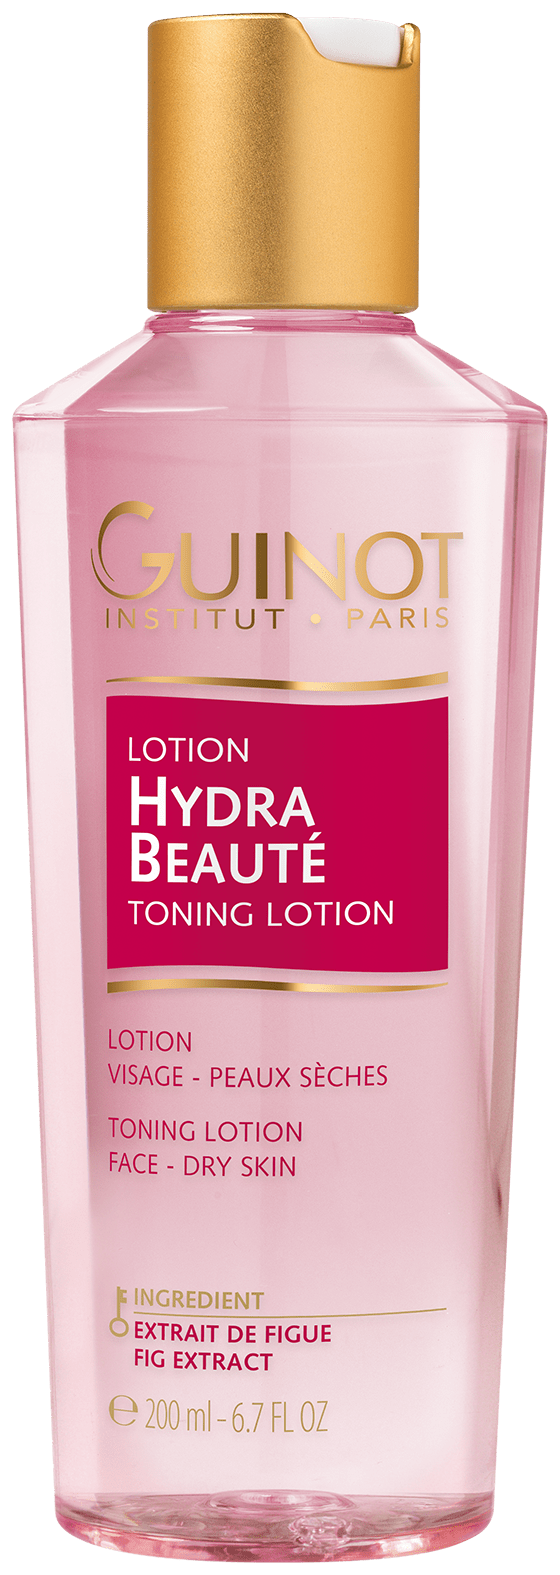 Guinot Lotion Hydra Beaute